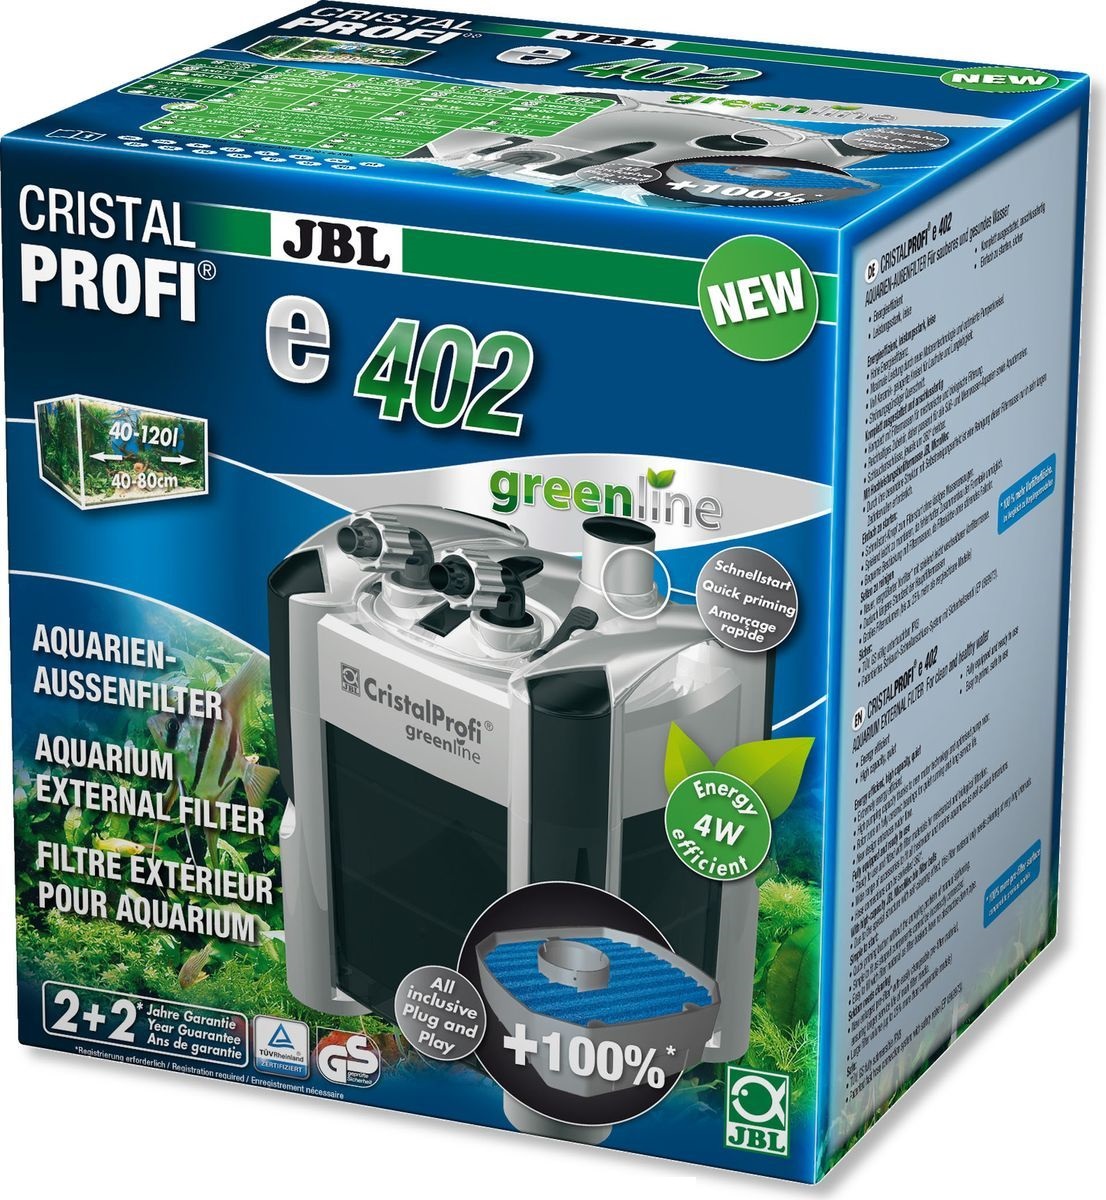 JBL CristalProfi e402 greenline + - Внешний фильтр для аквариумов объемом 40-120 л